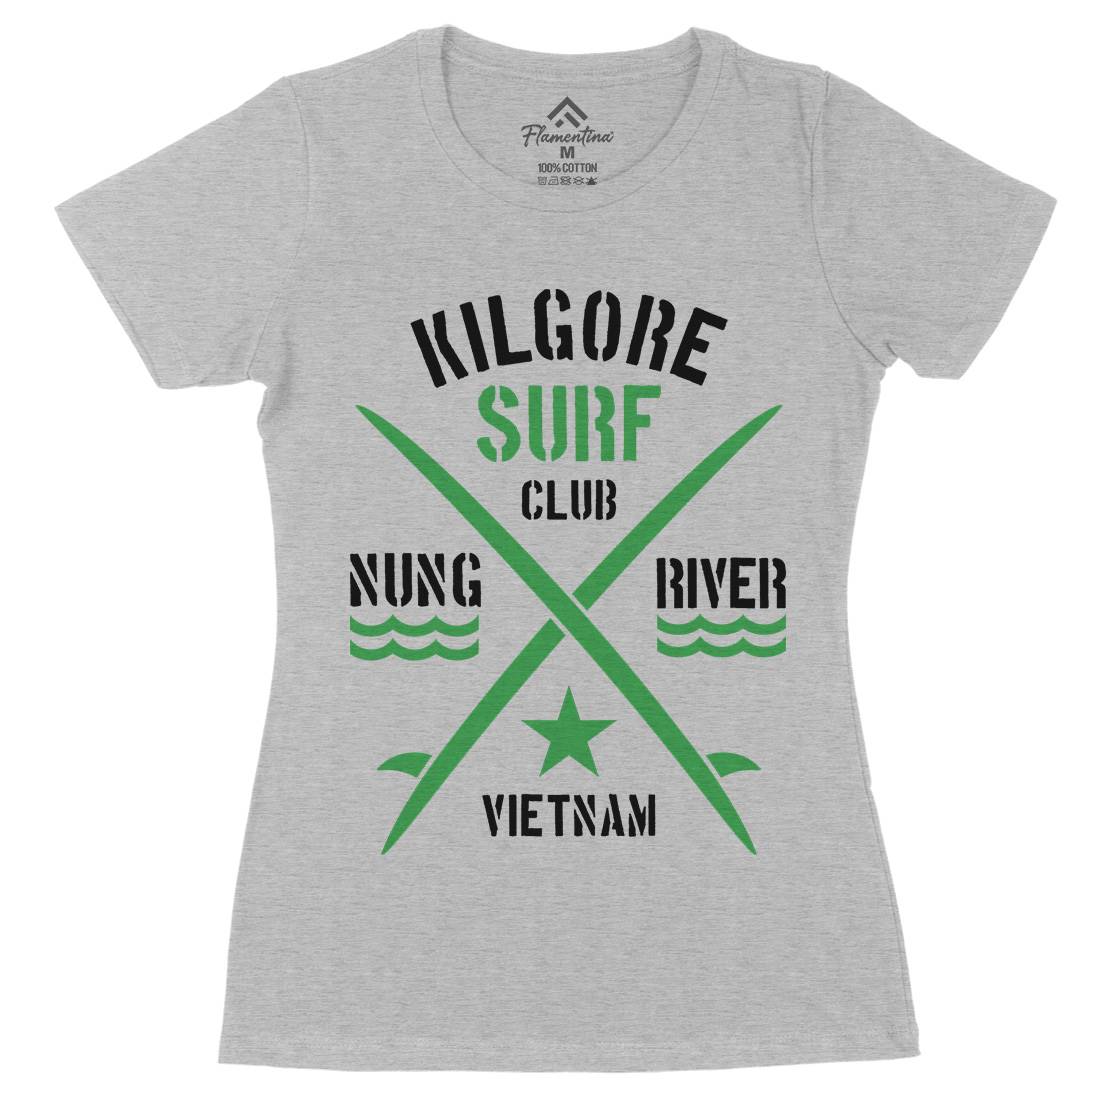 Kilgore Club Womens Organic Crew Neck T-Shirt Surf D234